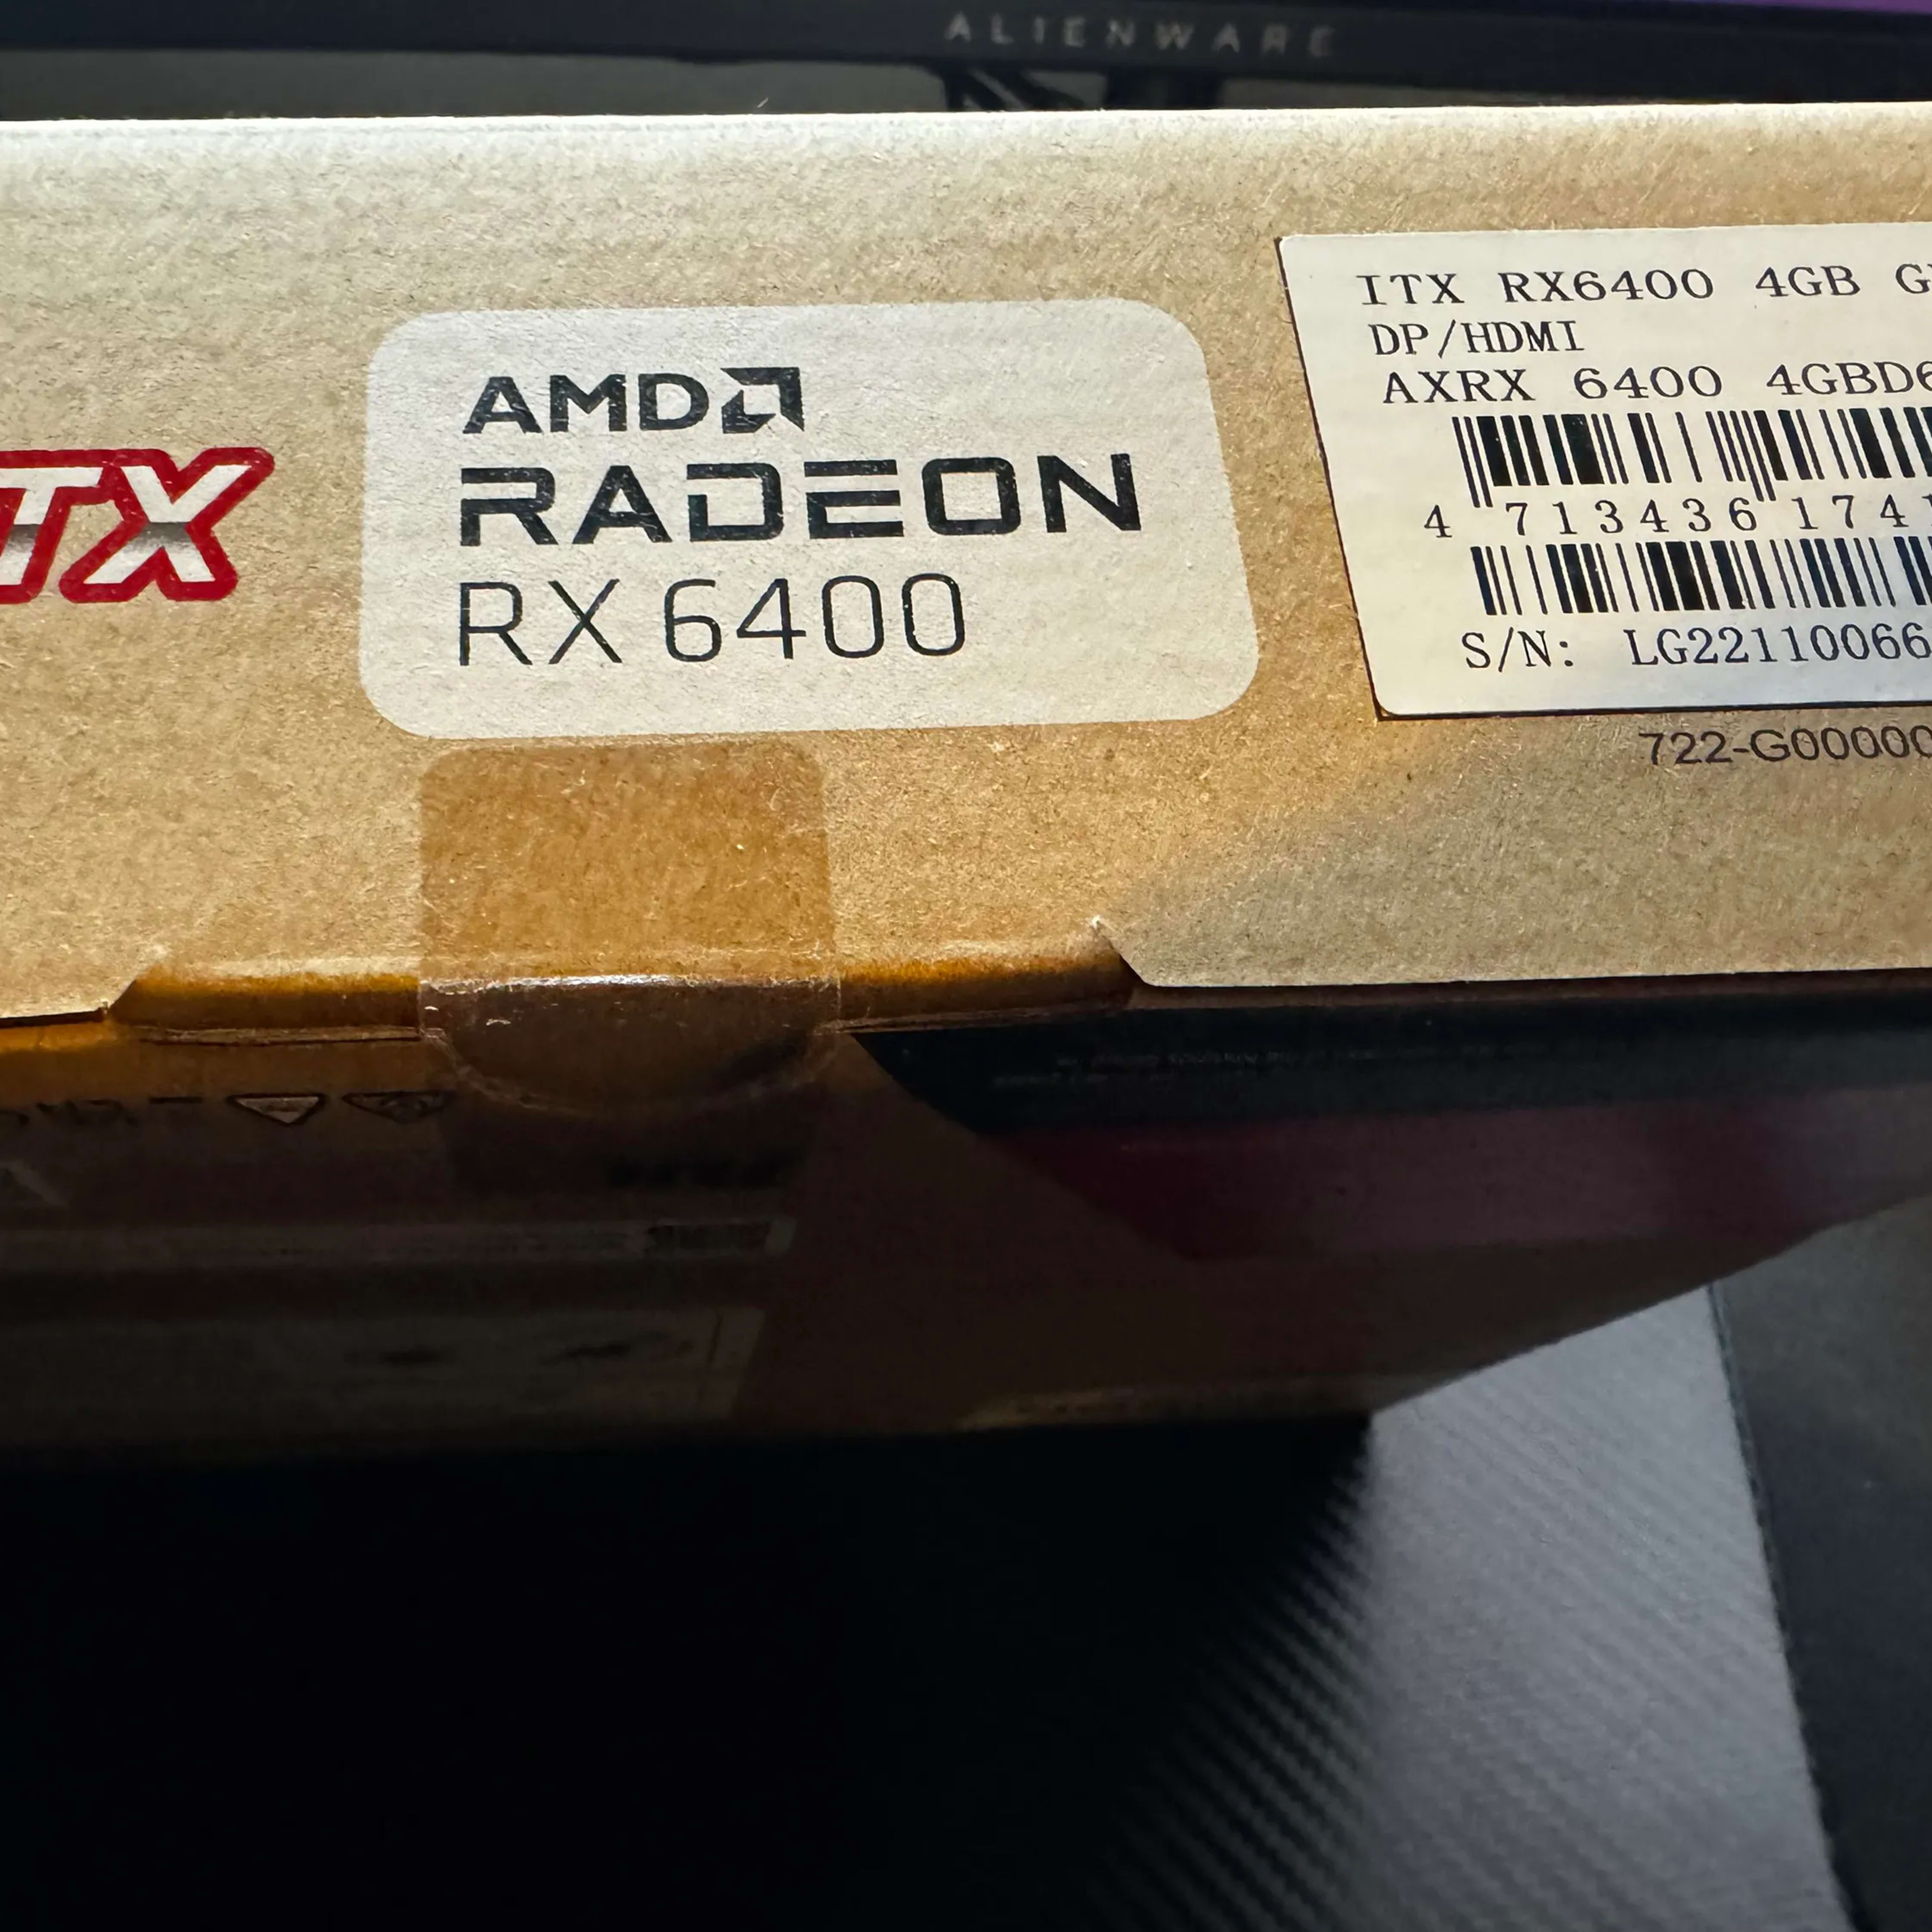 BNIB PowerColor AMD Radeon RX 6400 ITX Graphics Card with 4GB GDDR6 Memory